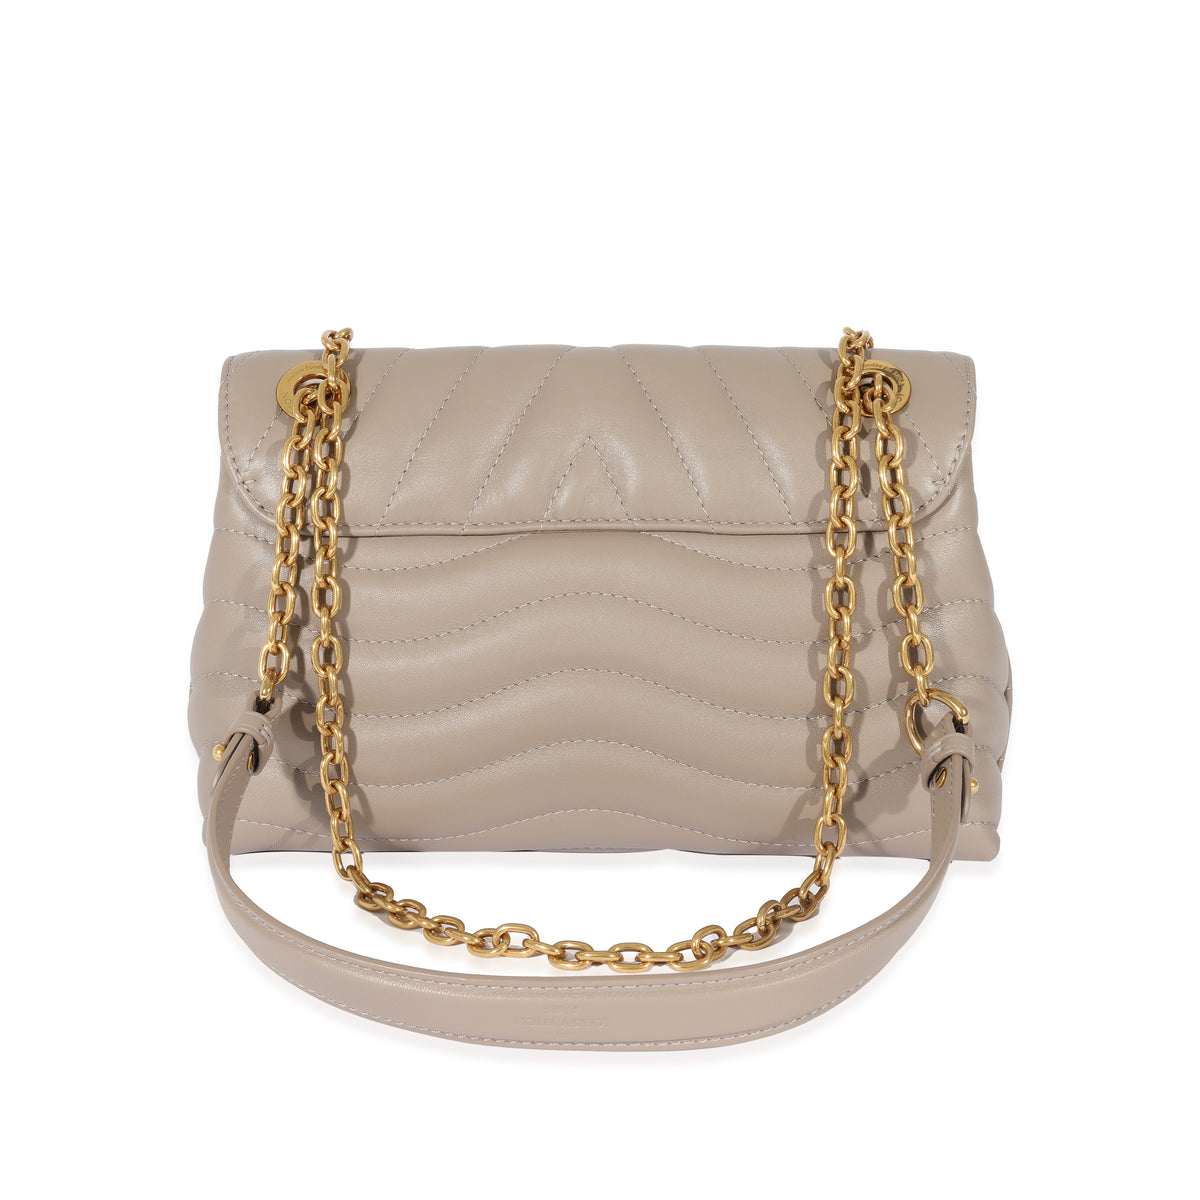 Handbags Louis Vuitton LV New Wave Bag GM Taupe